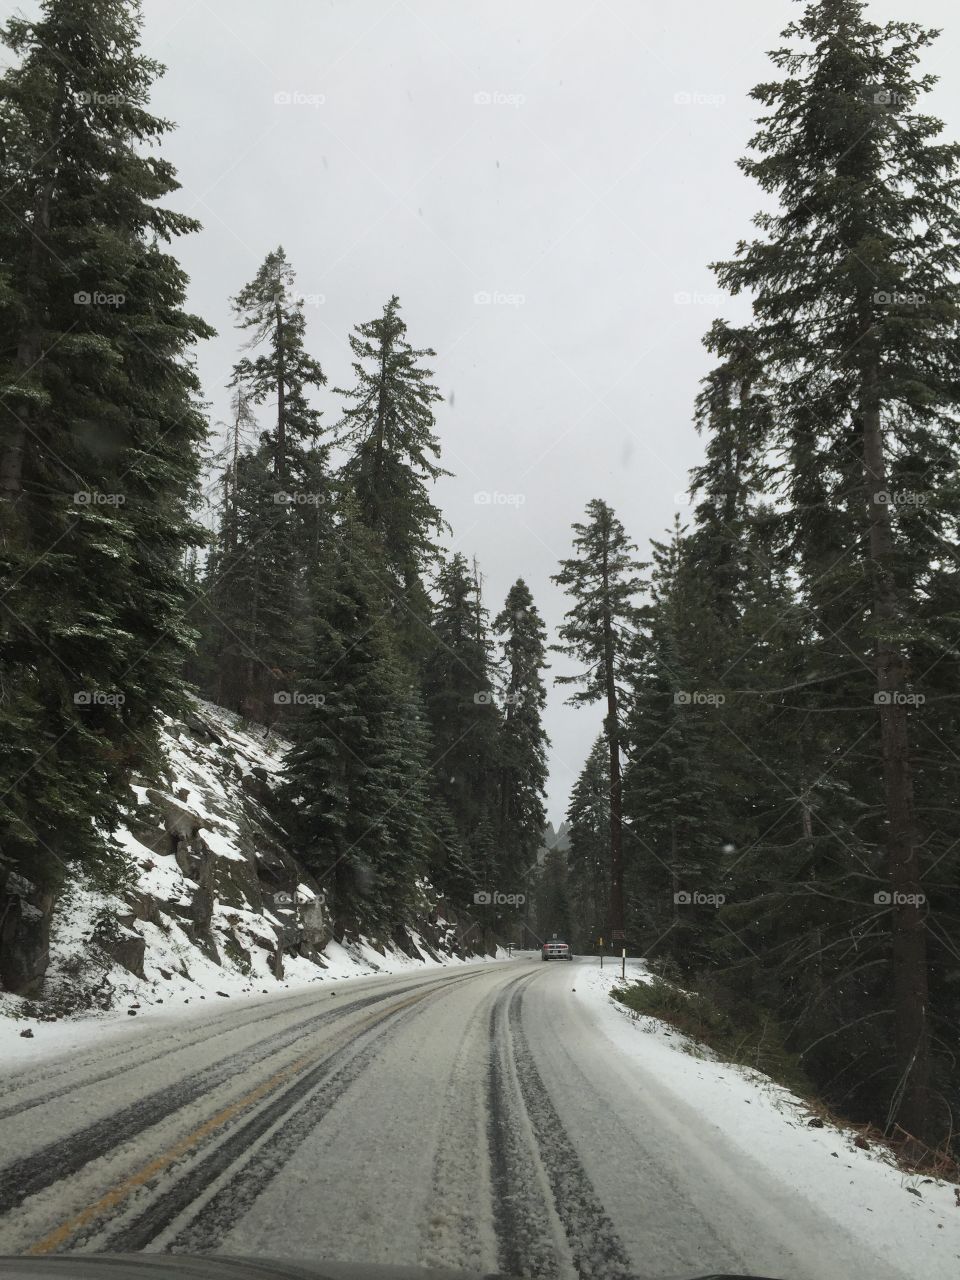 Driving in a Winter Wonderland.